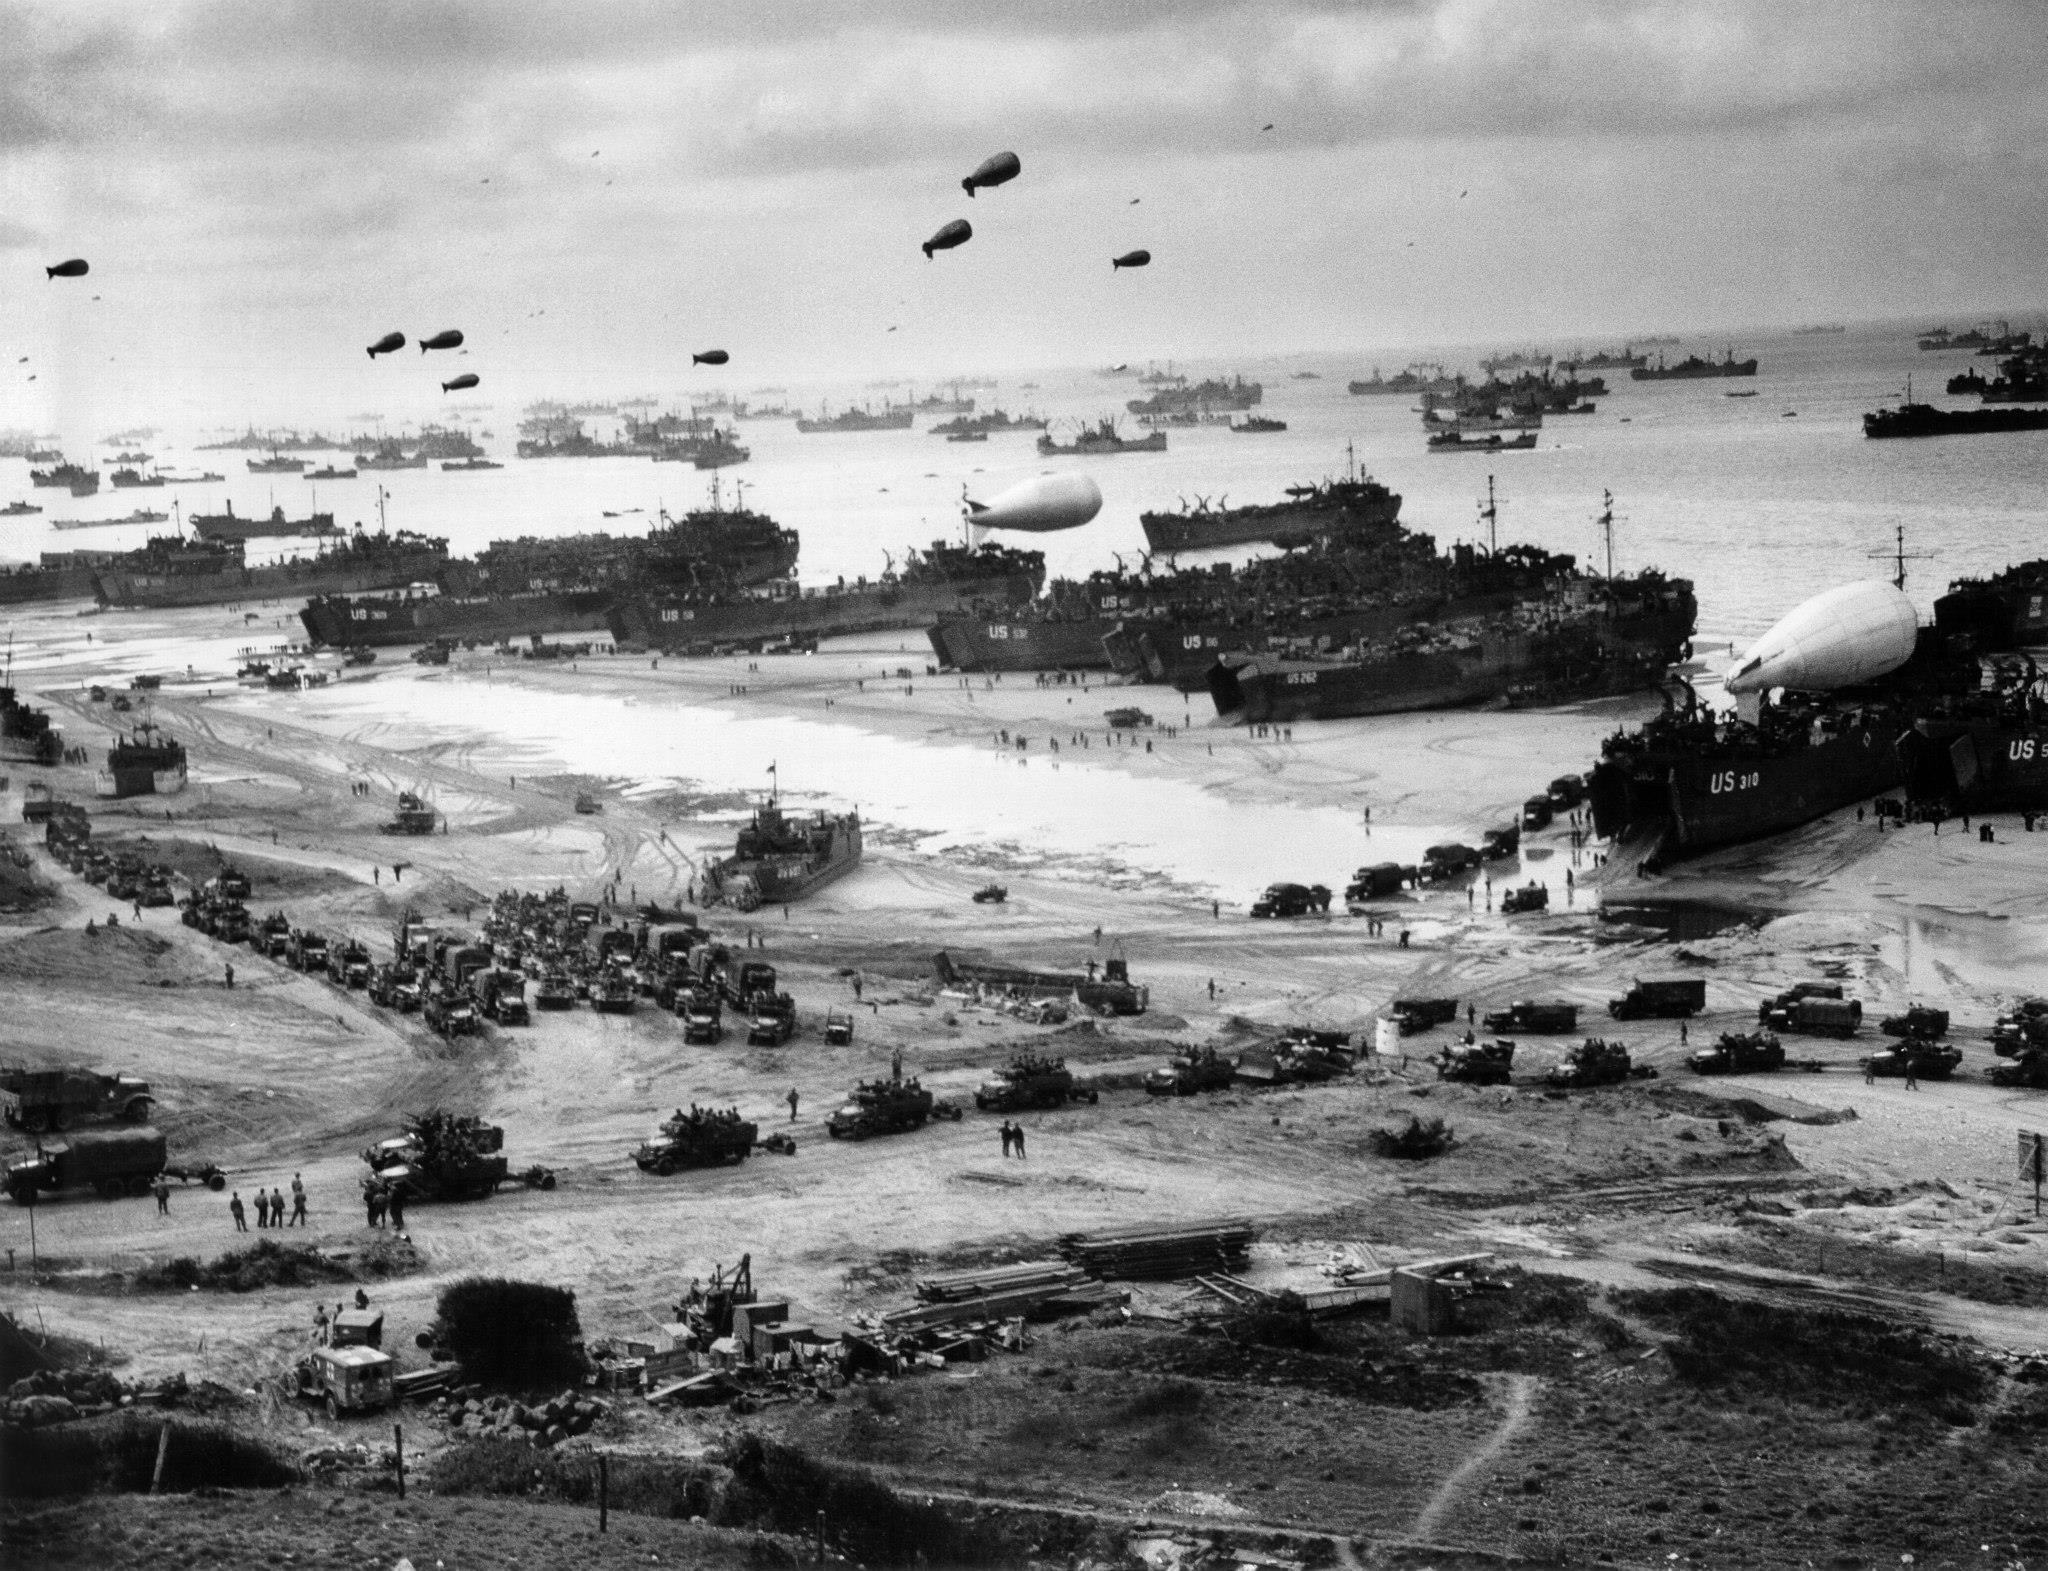 Omaha Beach de 'Le Ruquet' Draw, Normandie, Frankrijk 1944